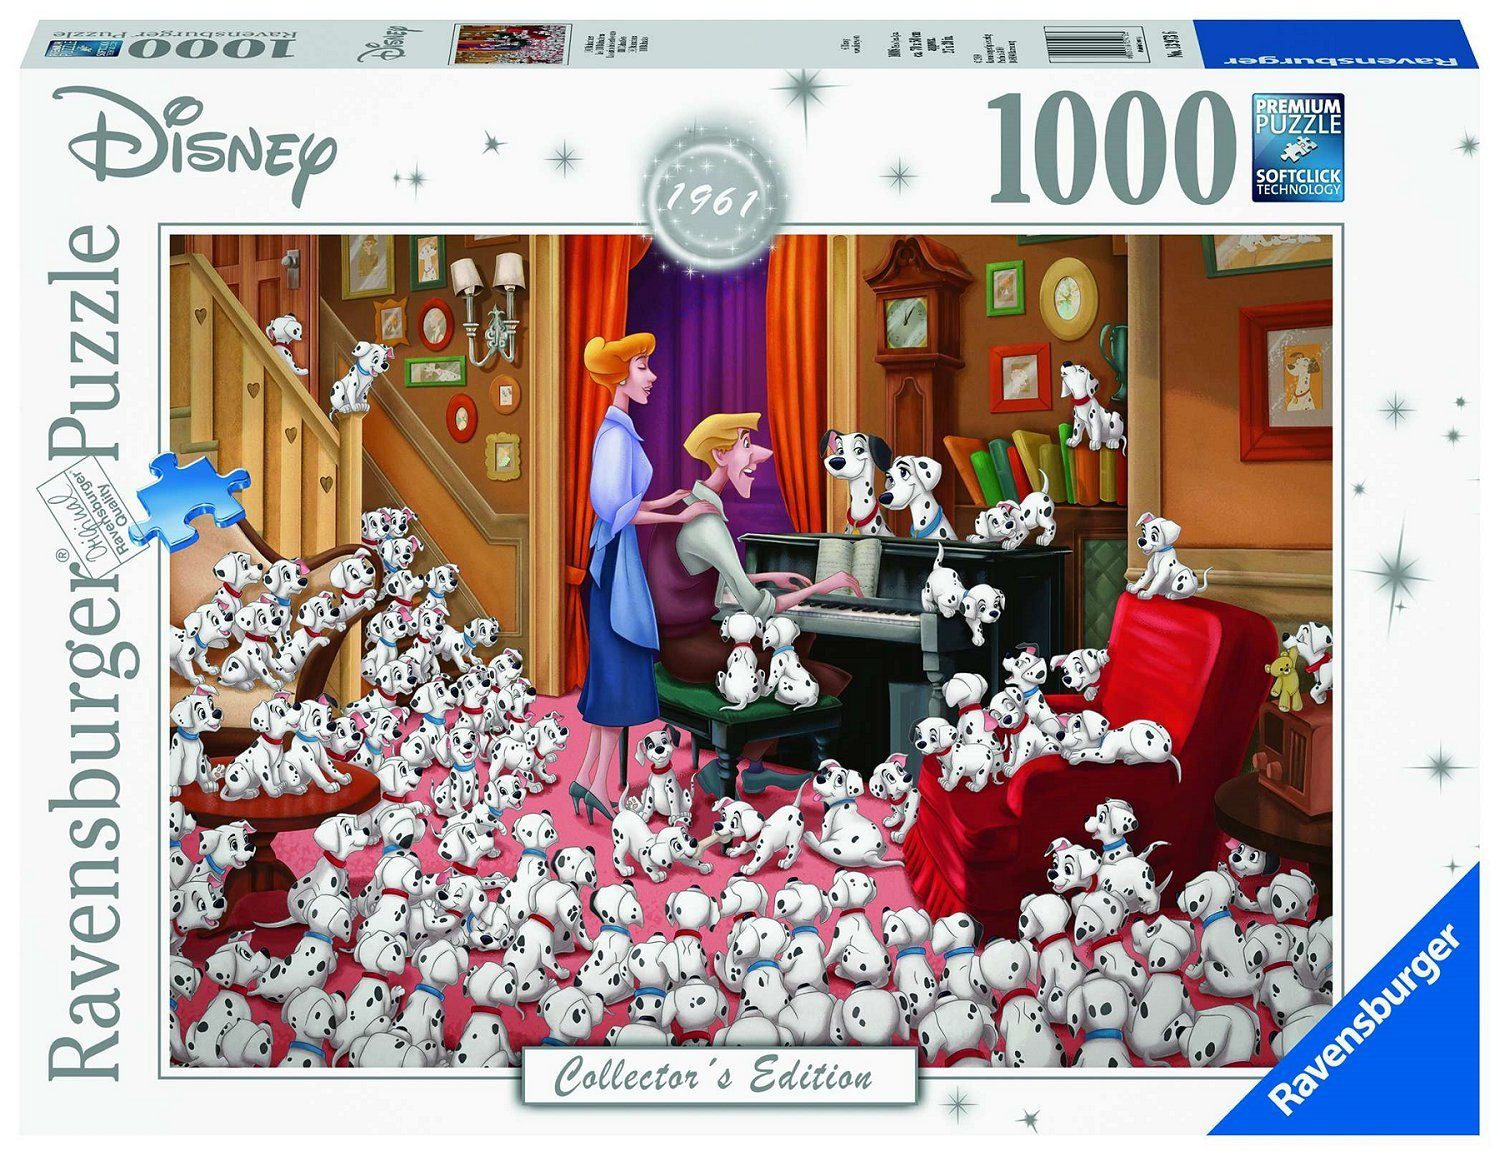 1000 Puzzleteile Teile Ravensburger 13973 1000 Disney Puzzle 101 Puzzle, Dalmatiner